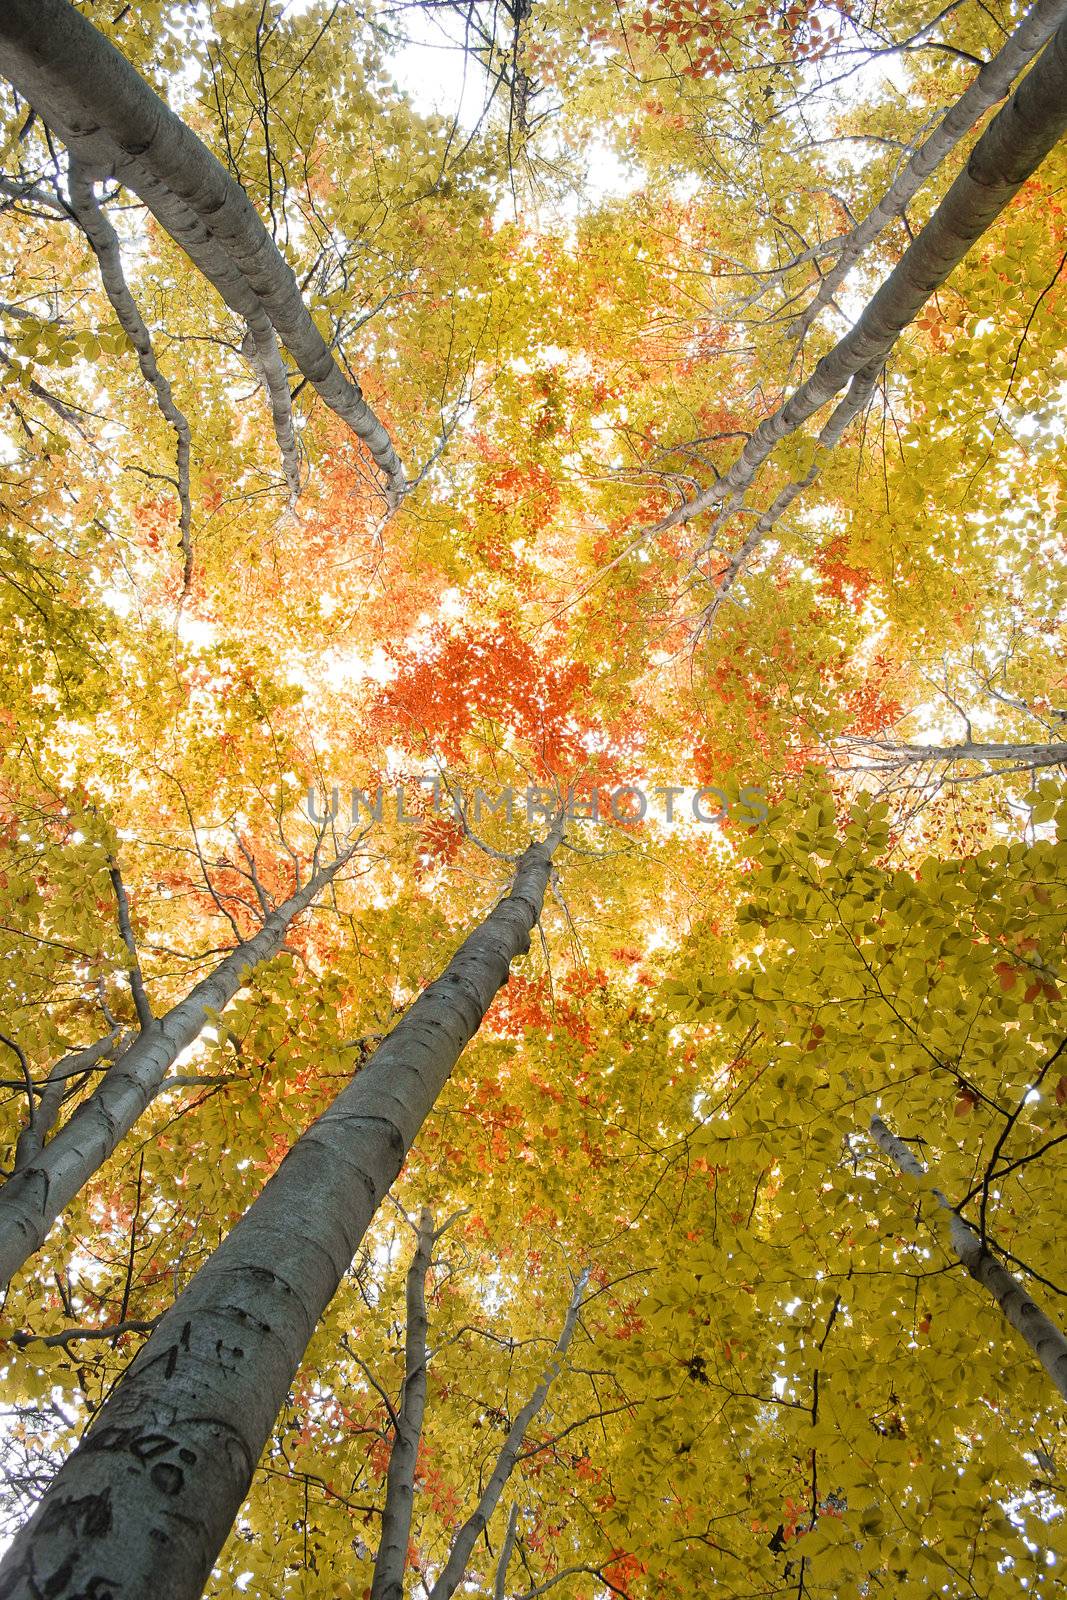 Trees in early autumn by cristiaciobanu